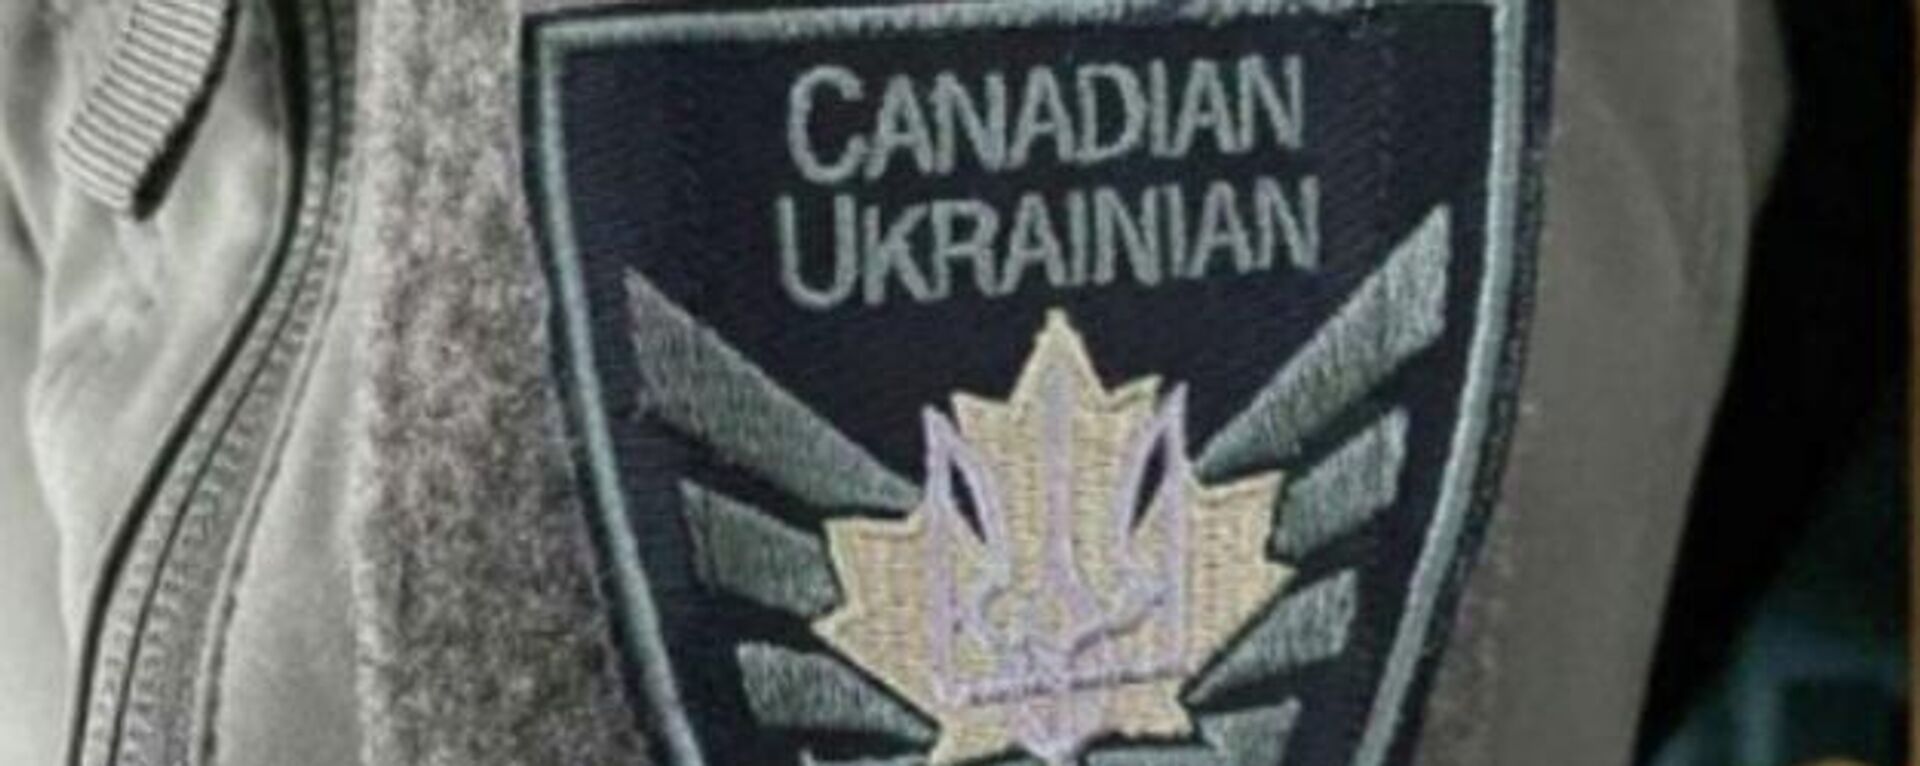 Canada's volunteers in Ukraine already have their own patch - Sputnik International, 1920, 05.07.2022